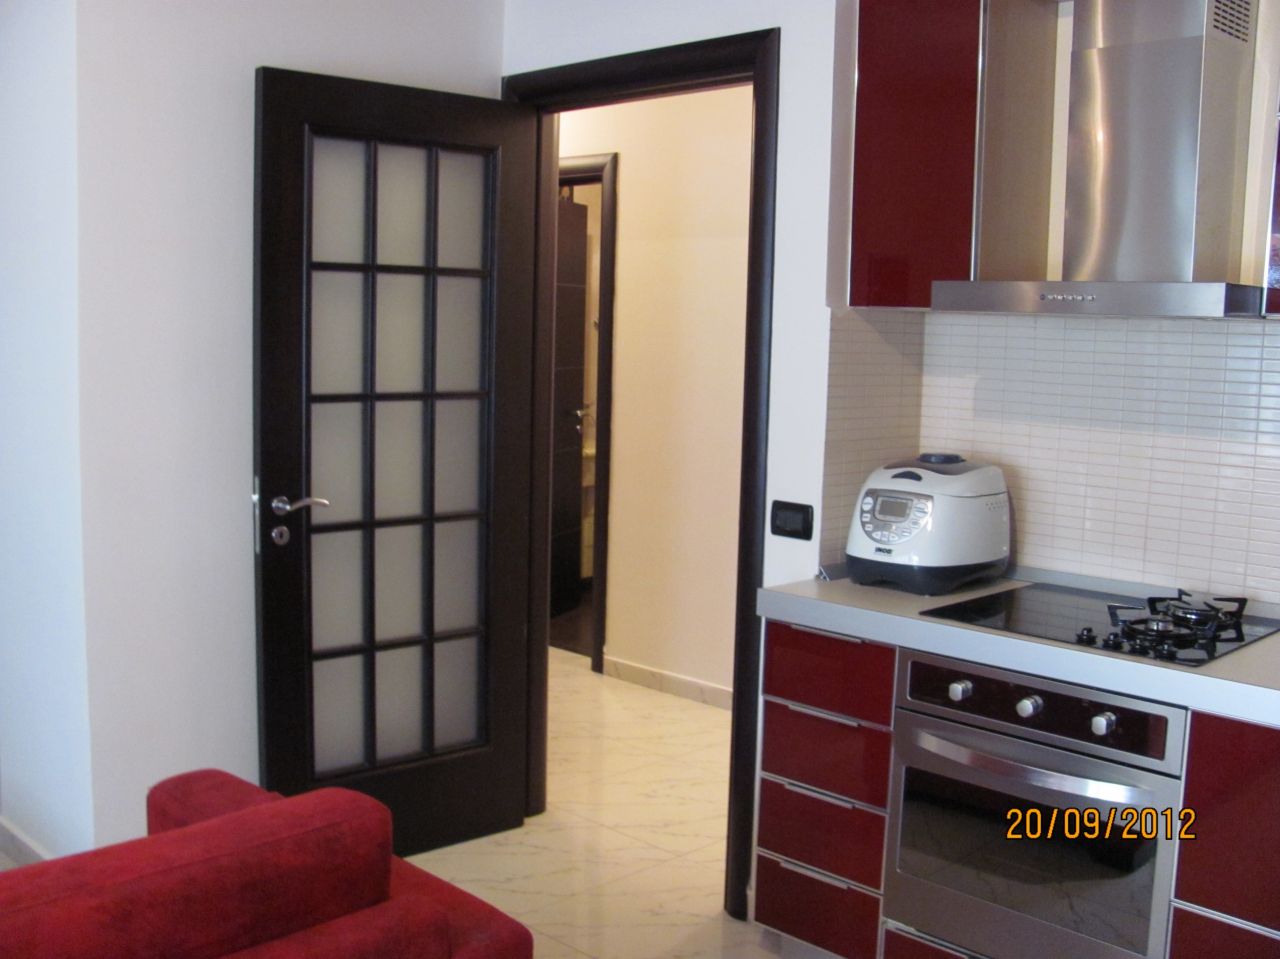 Apartment for Rent in Tirana. 